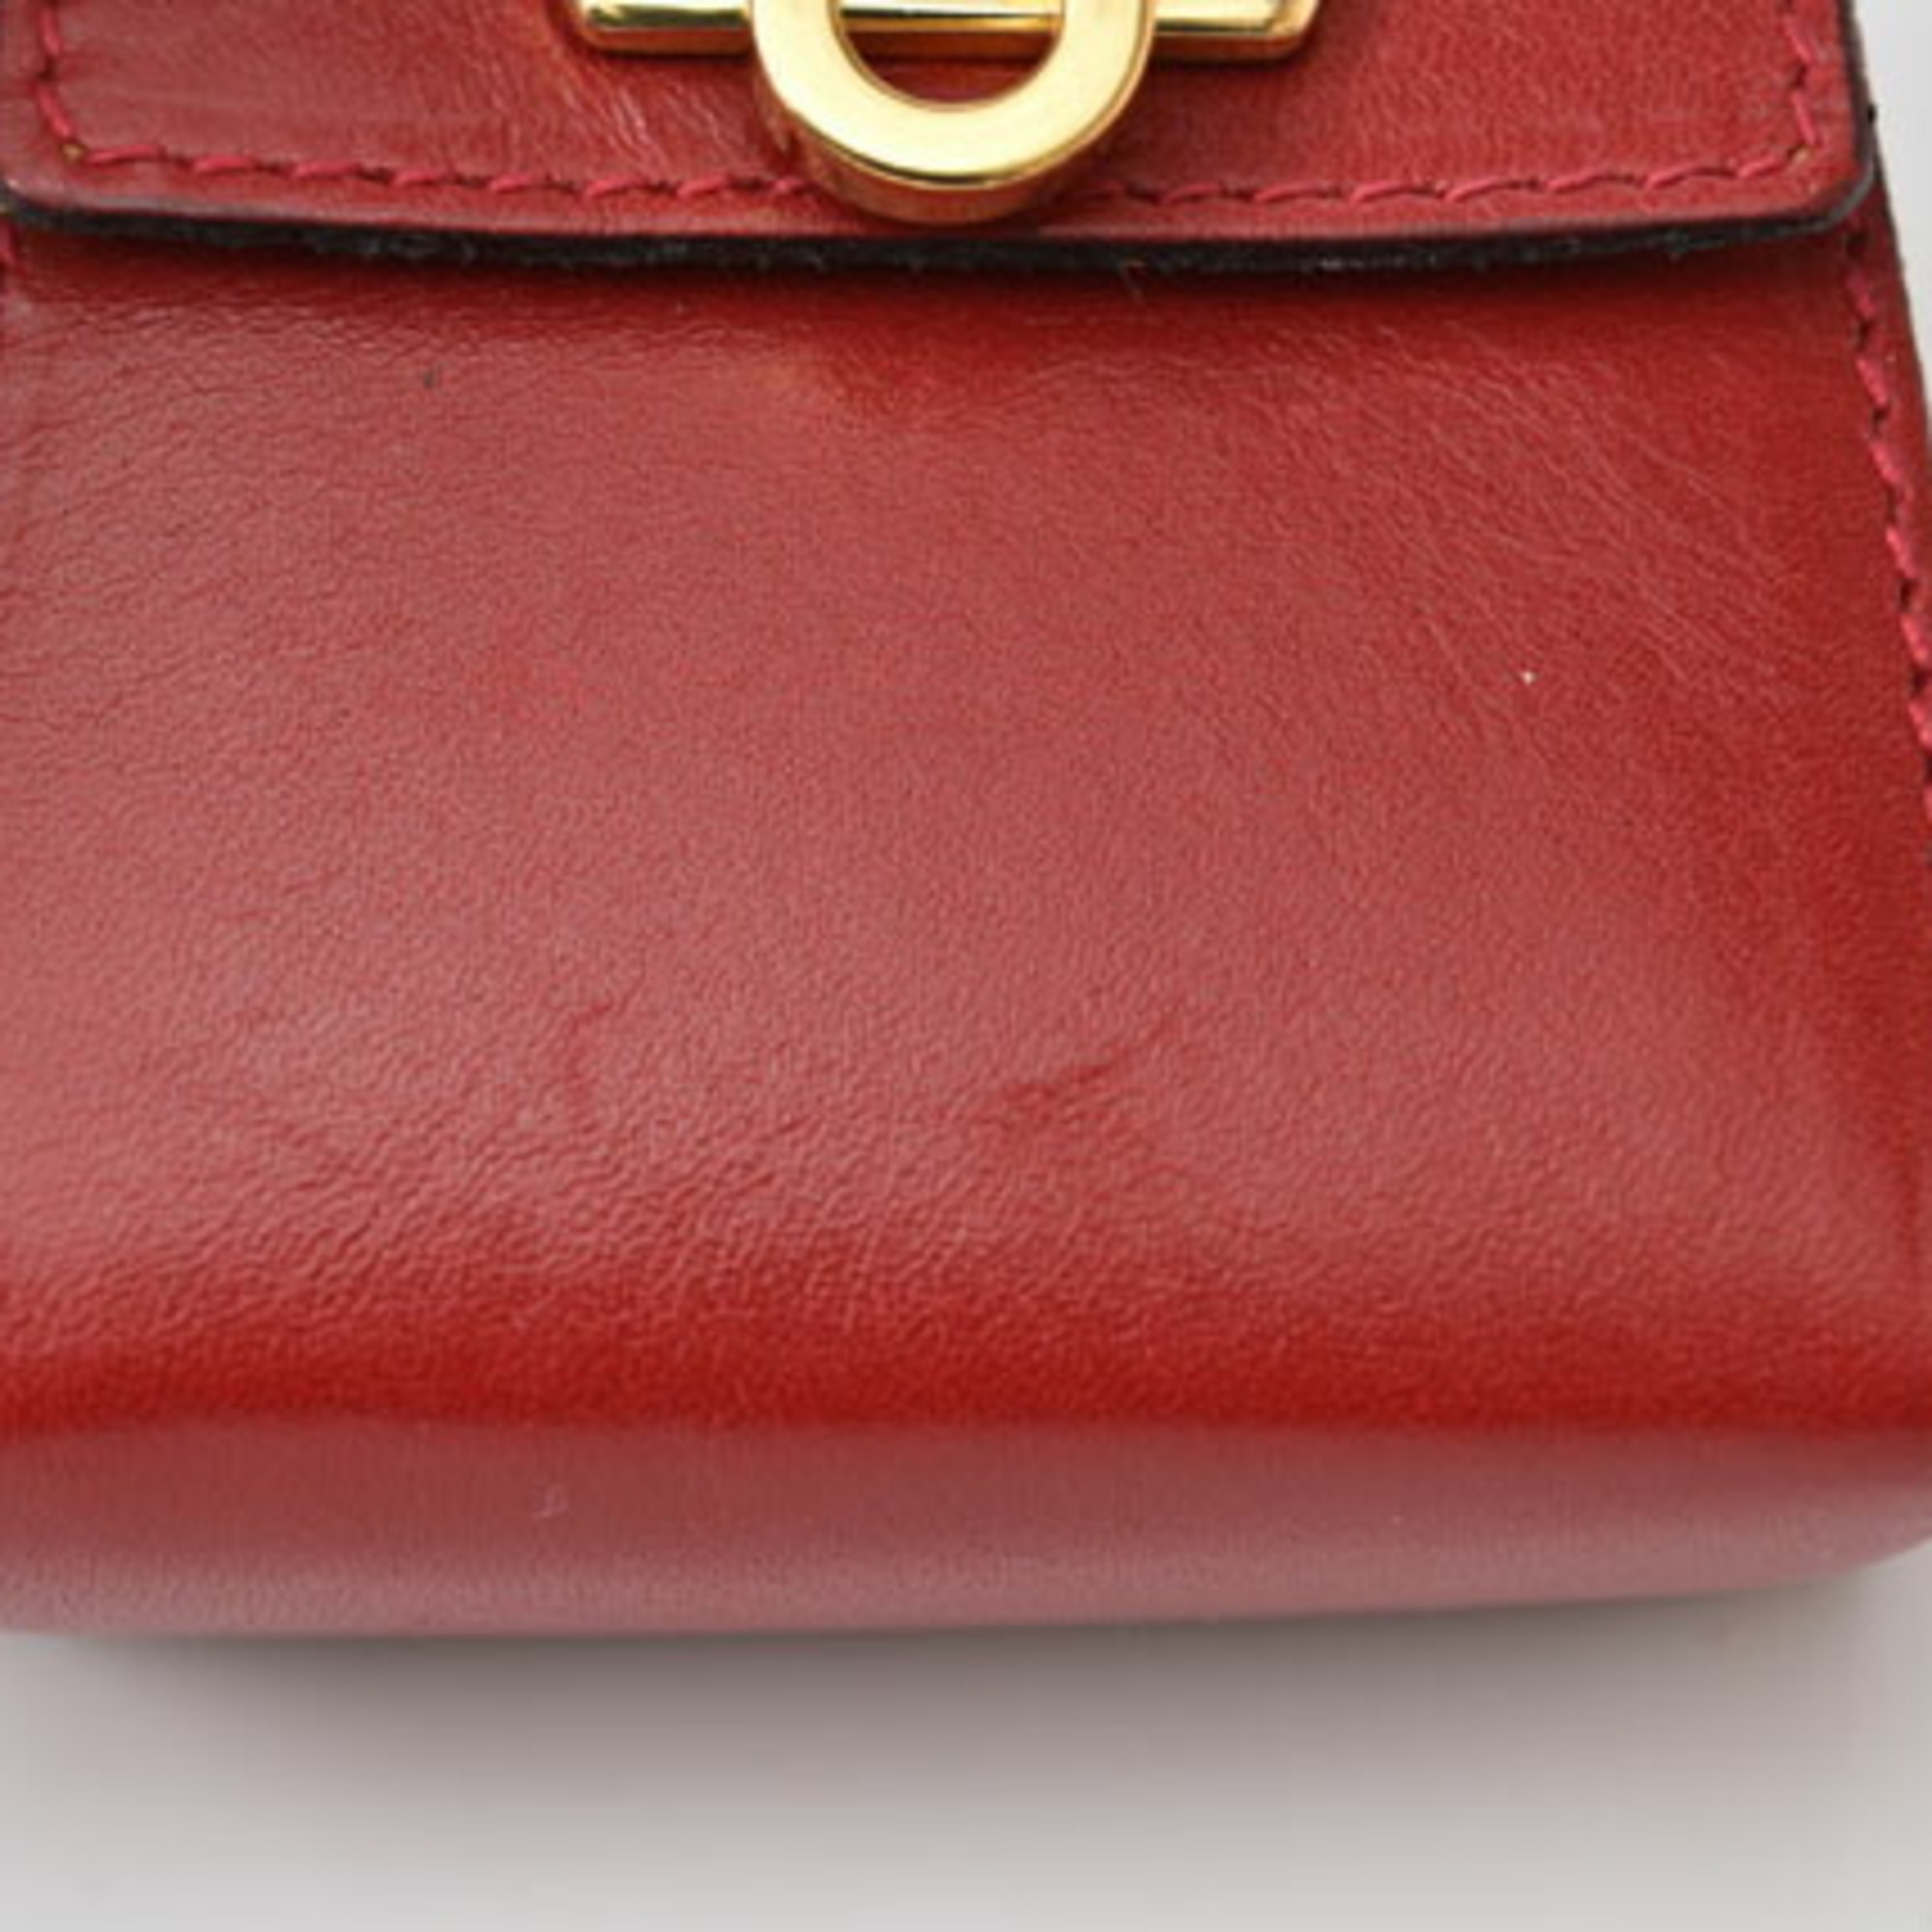 Salvatore Ferragamo Keyring Keychain Charm Gancini Bag Motif Dark Red Gold 225641